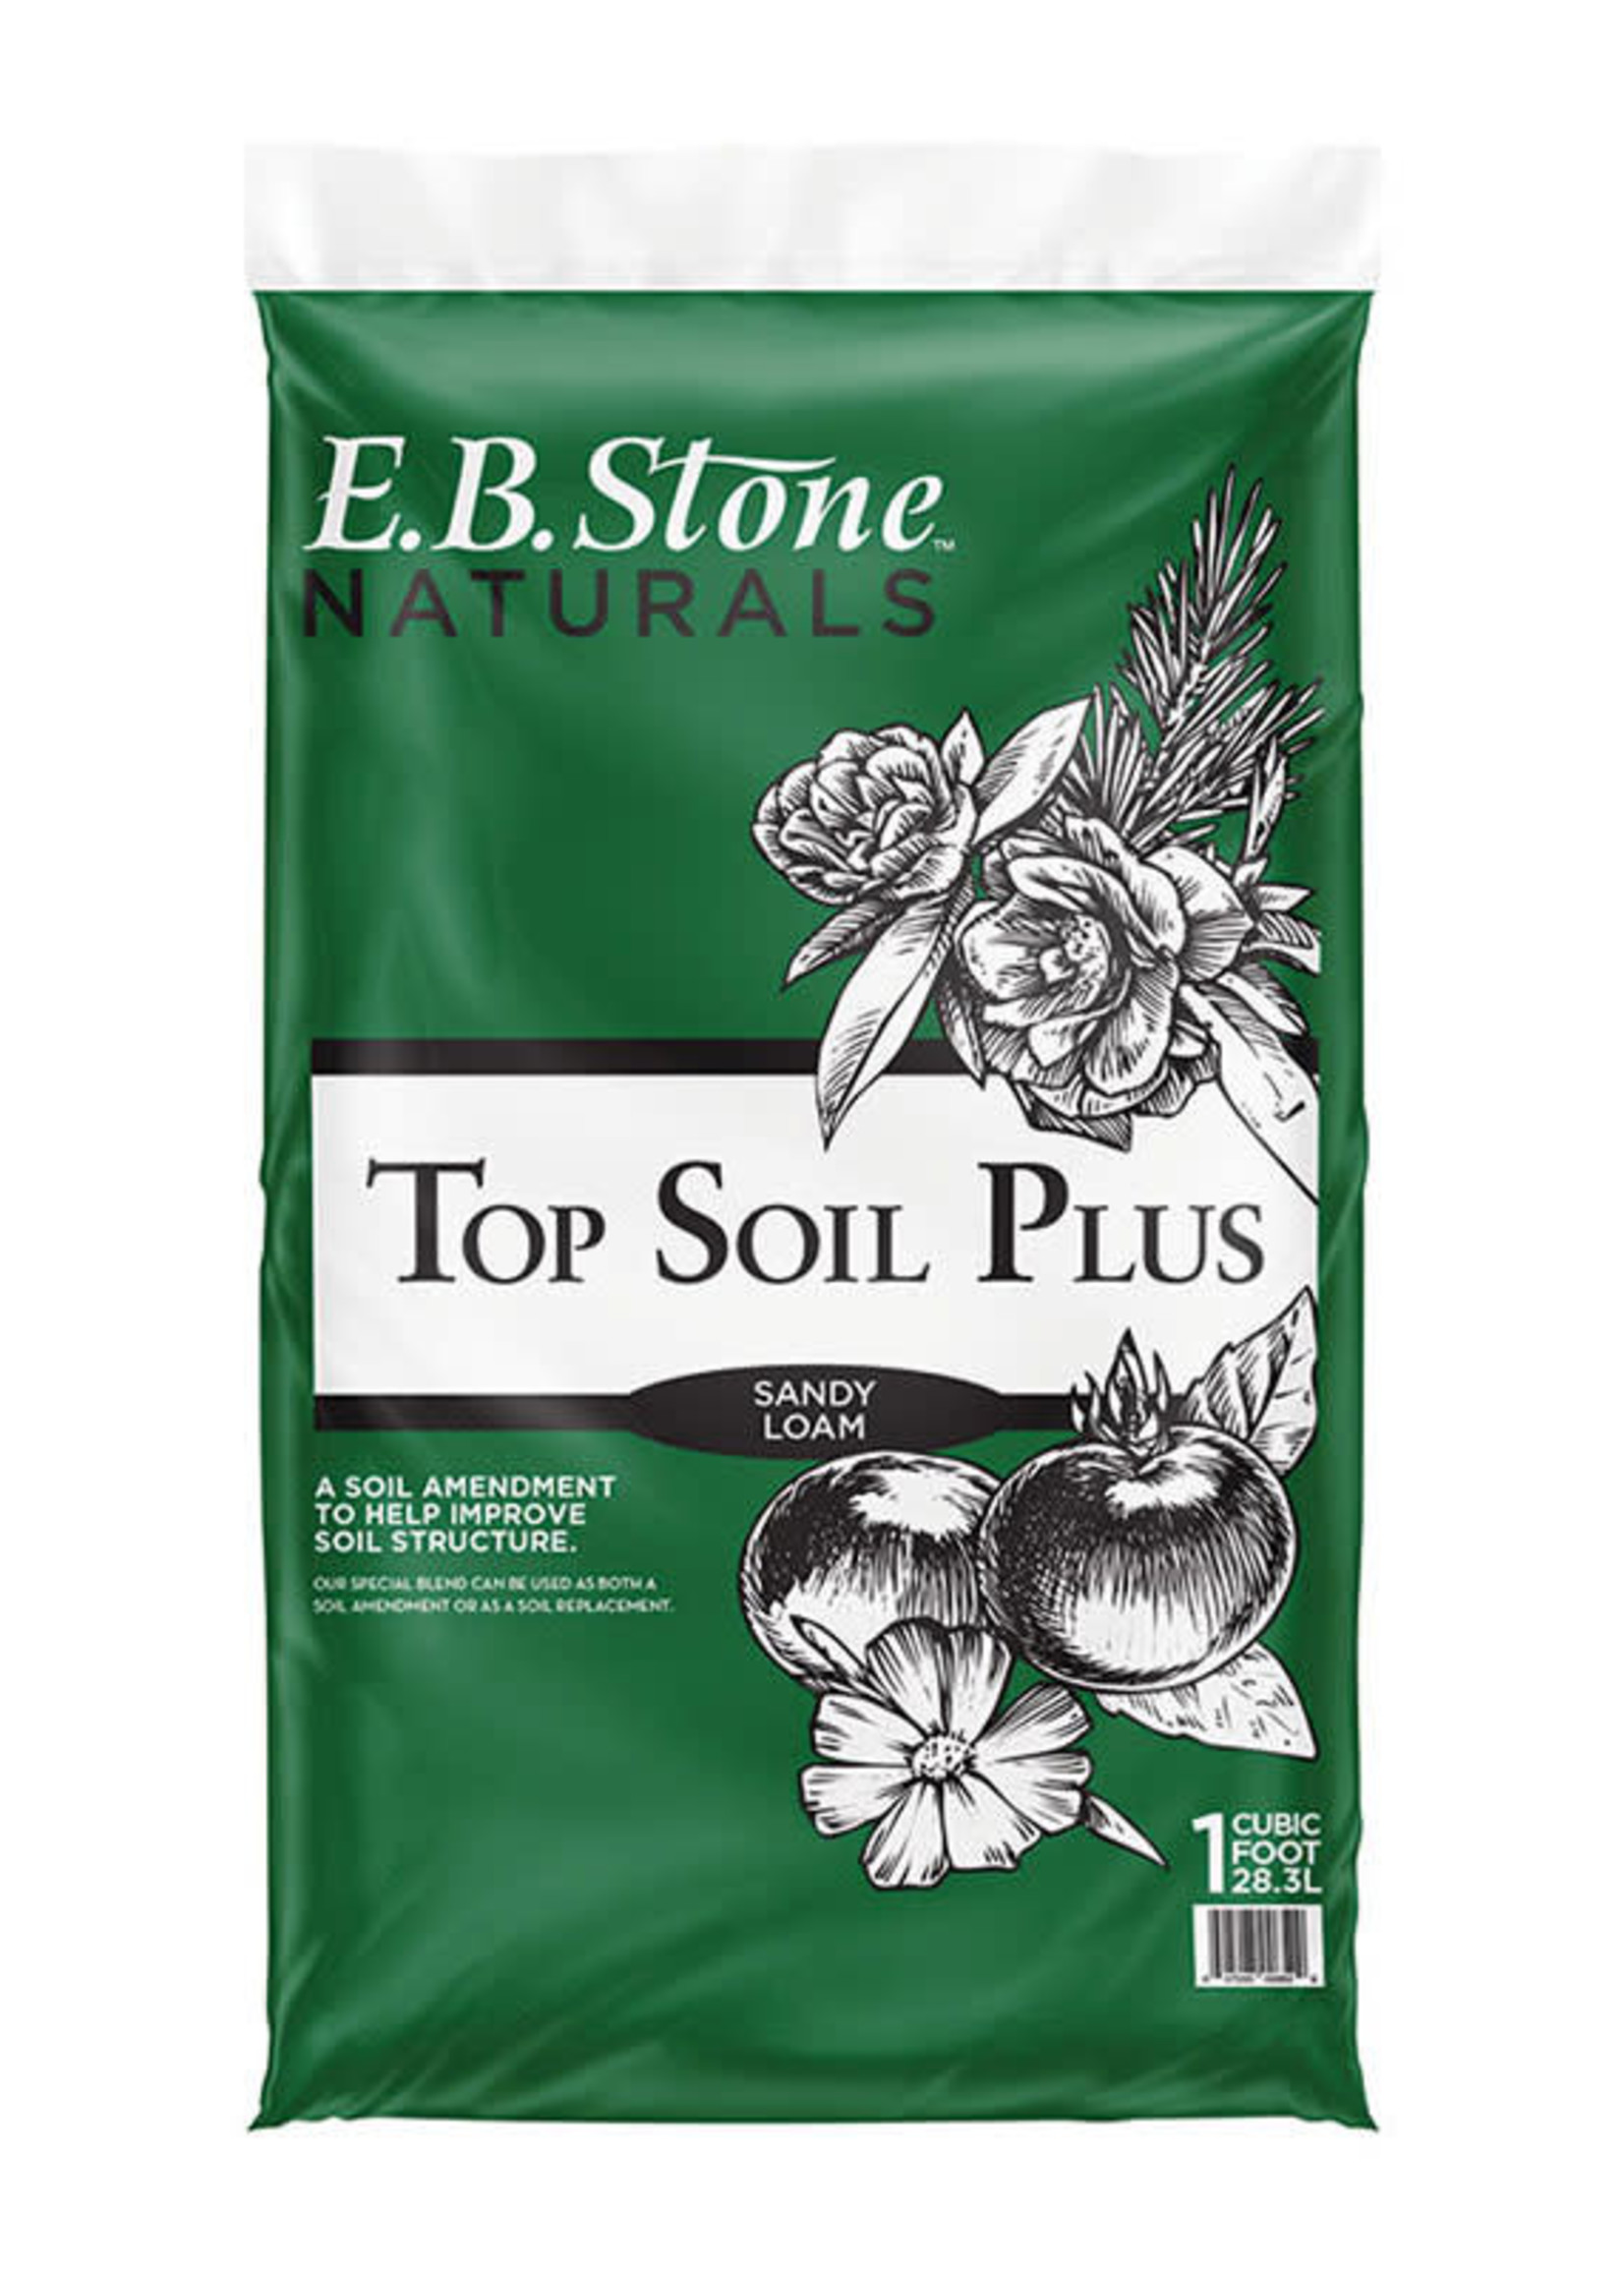 E.B. Stone Organics E.B. Stone Top Soil Plus 1 cubic feet